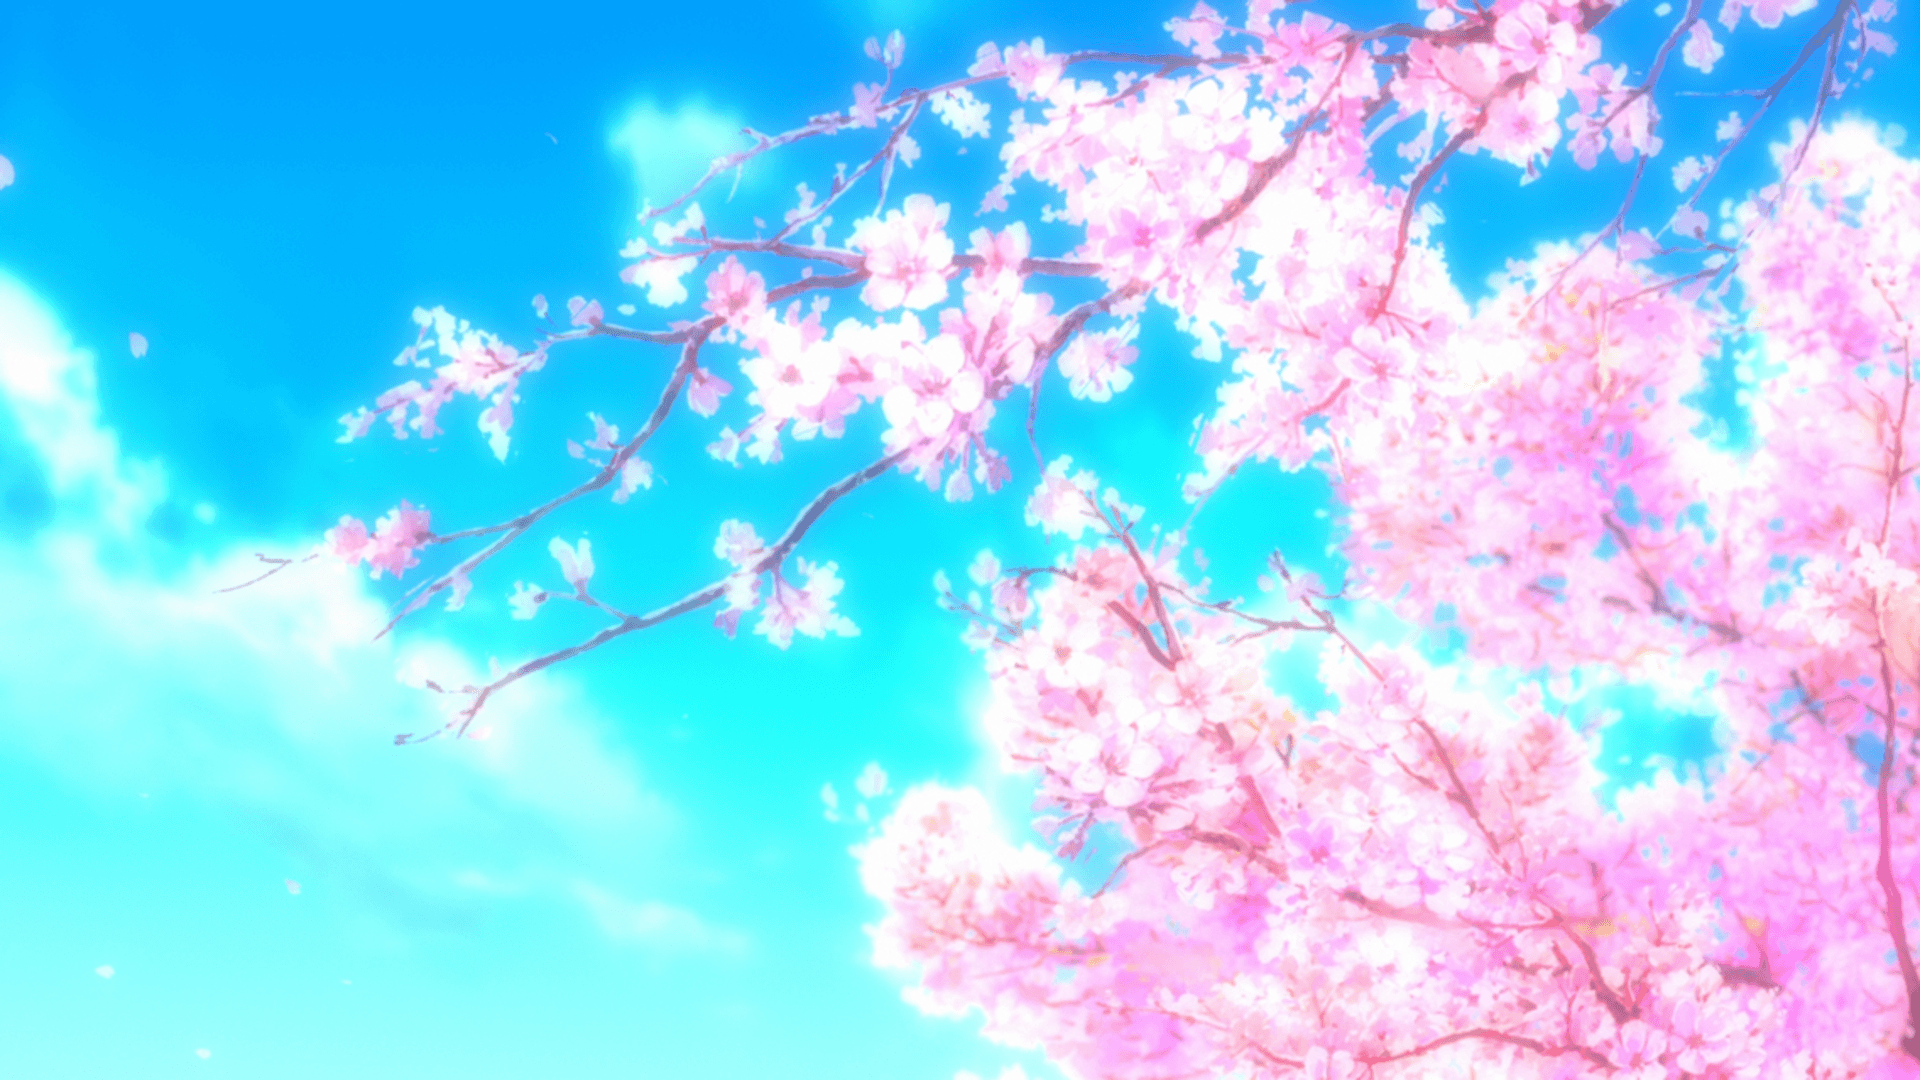 Download wallpaper 1024x768 guy sakura flowers anime art standard 43  hd background